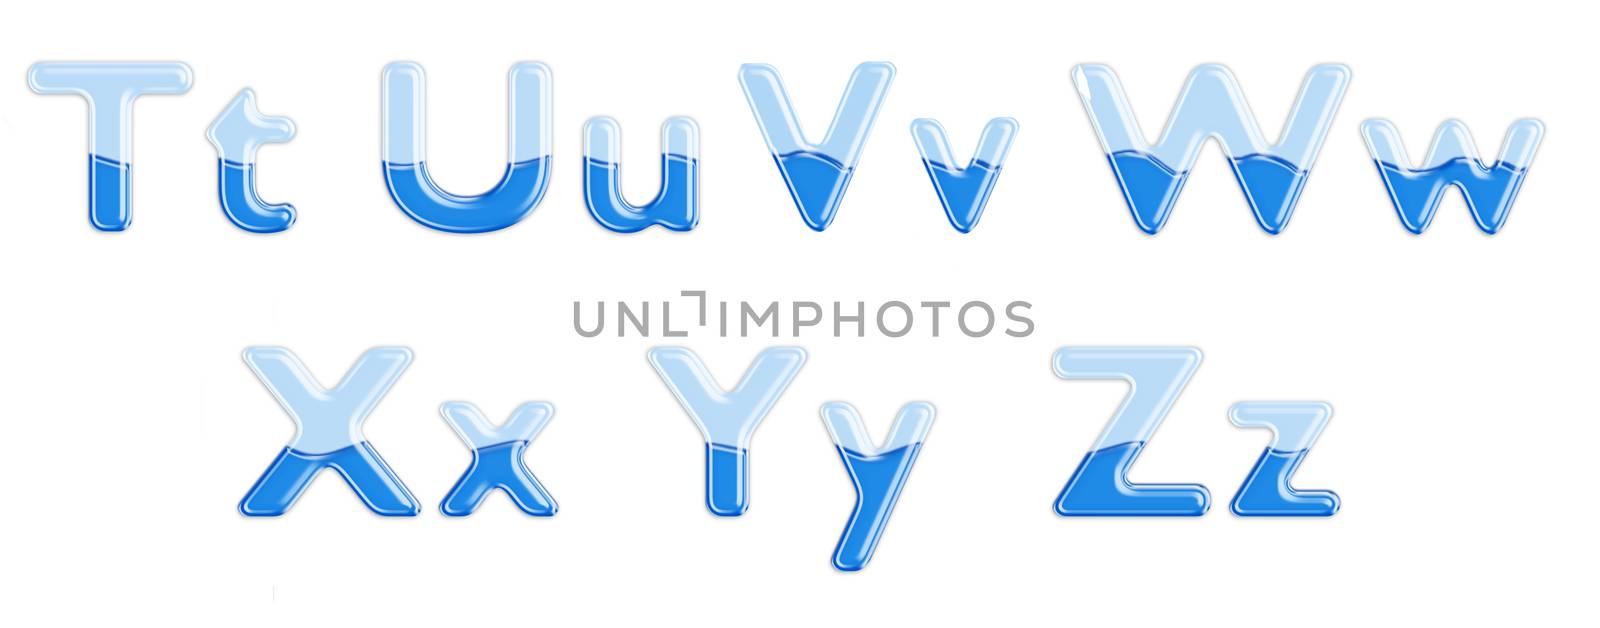 Set of glass letters half-full of blue liquid